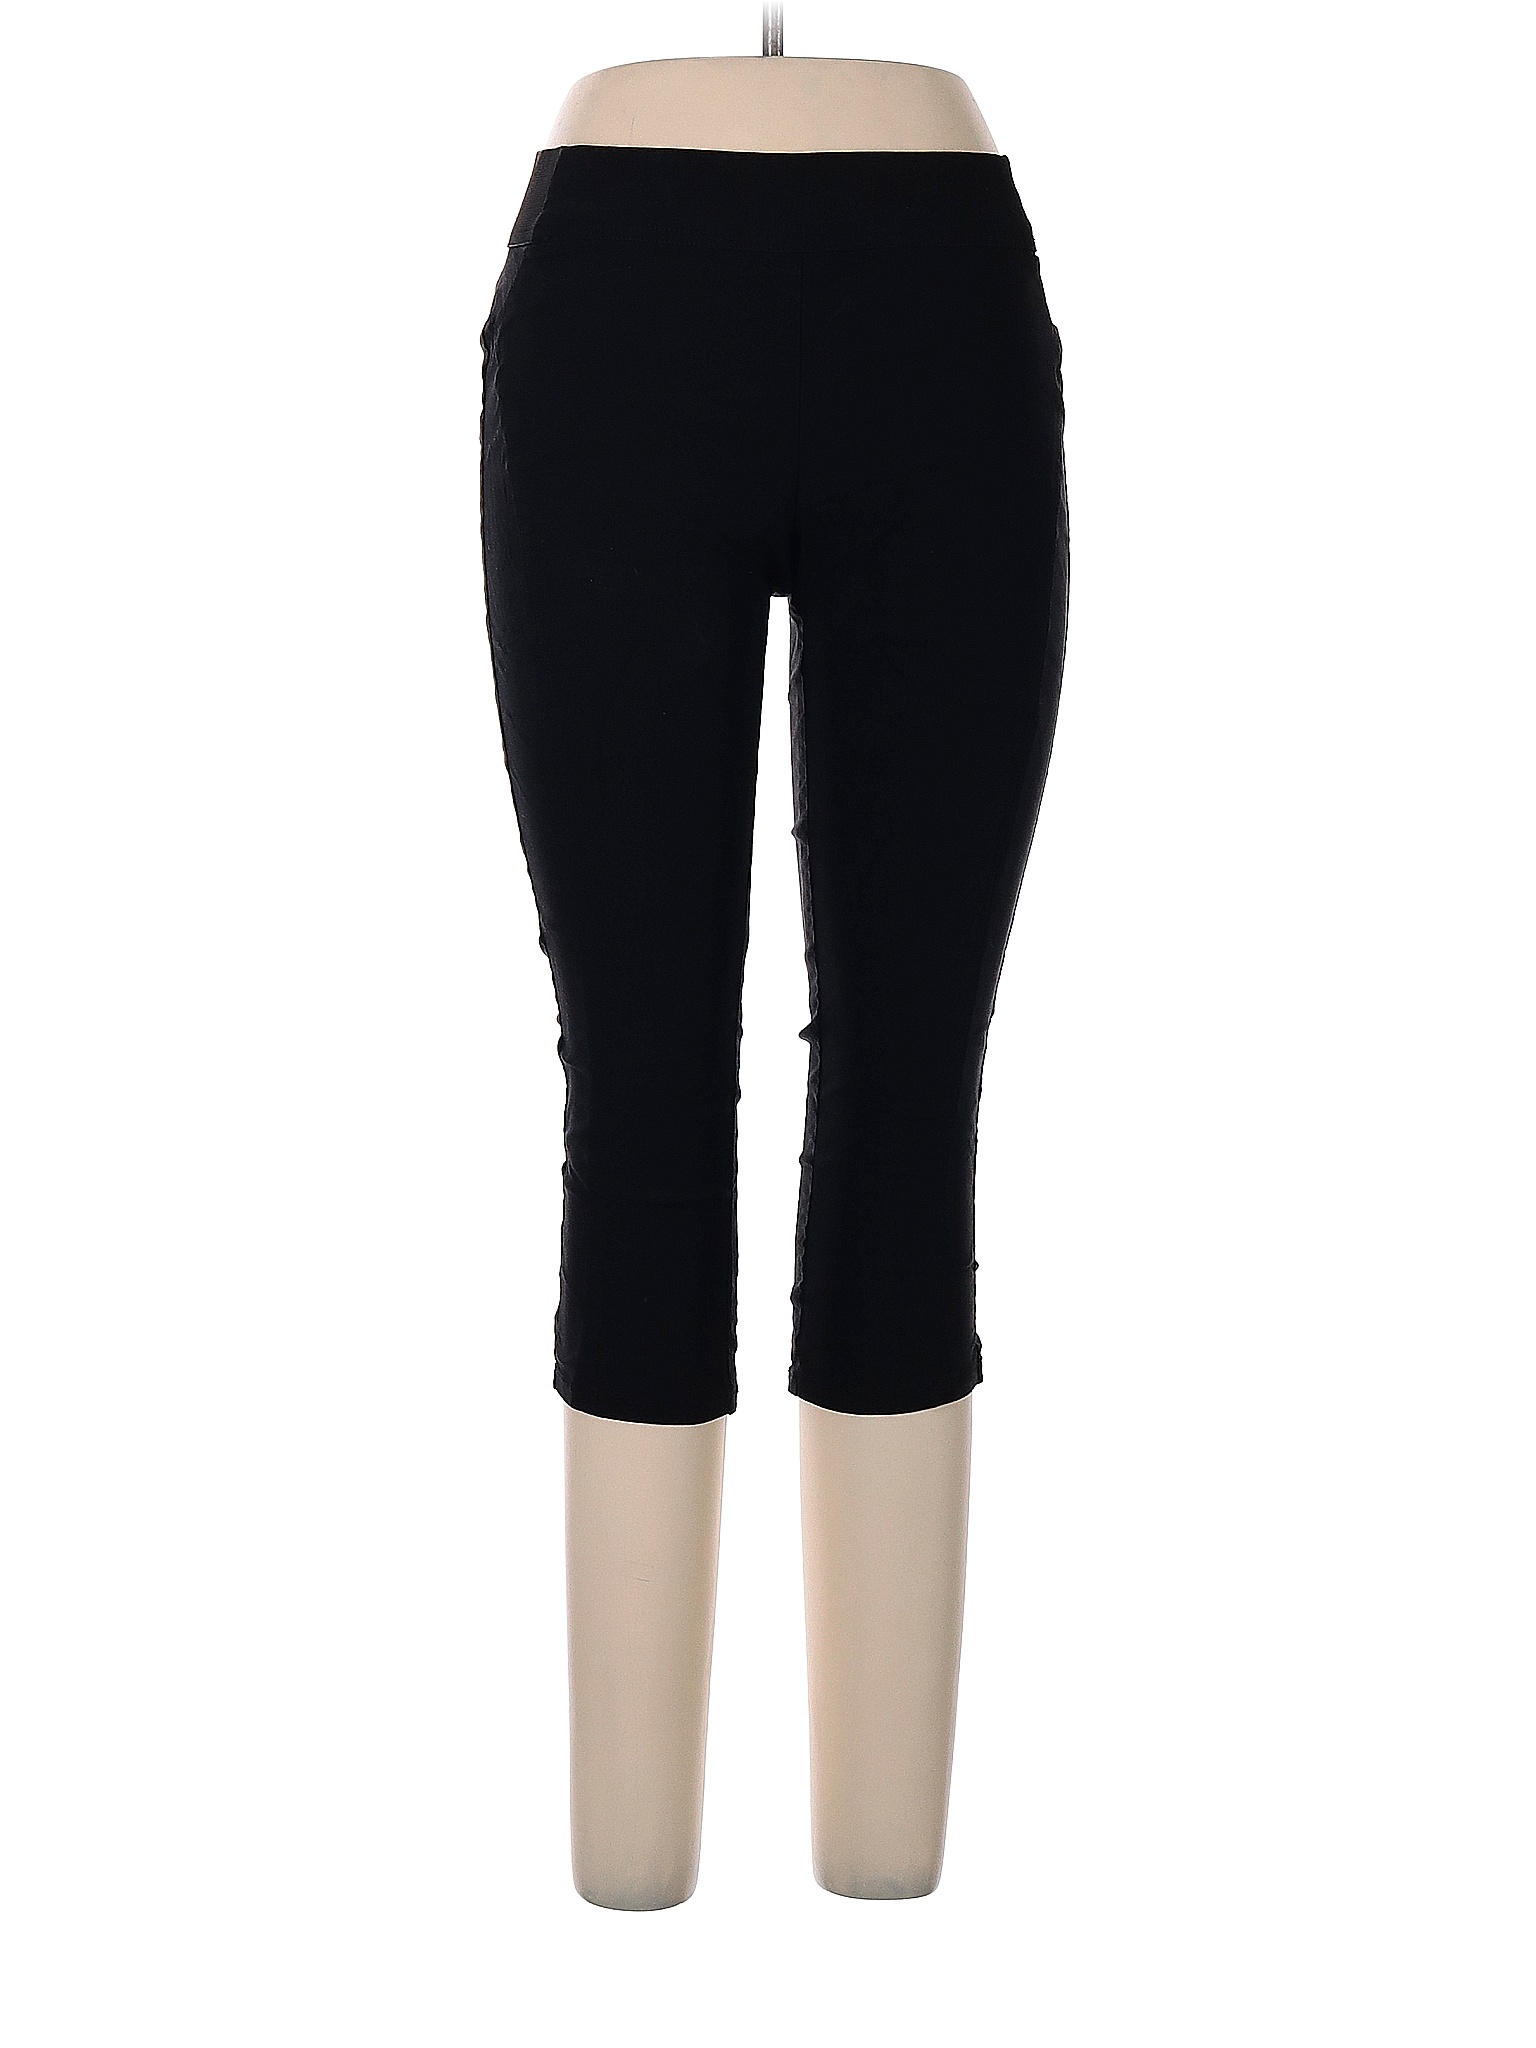 Simply Vera Vera Wang Solid Black Casual Pants Size L (Petite) - 78% ...